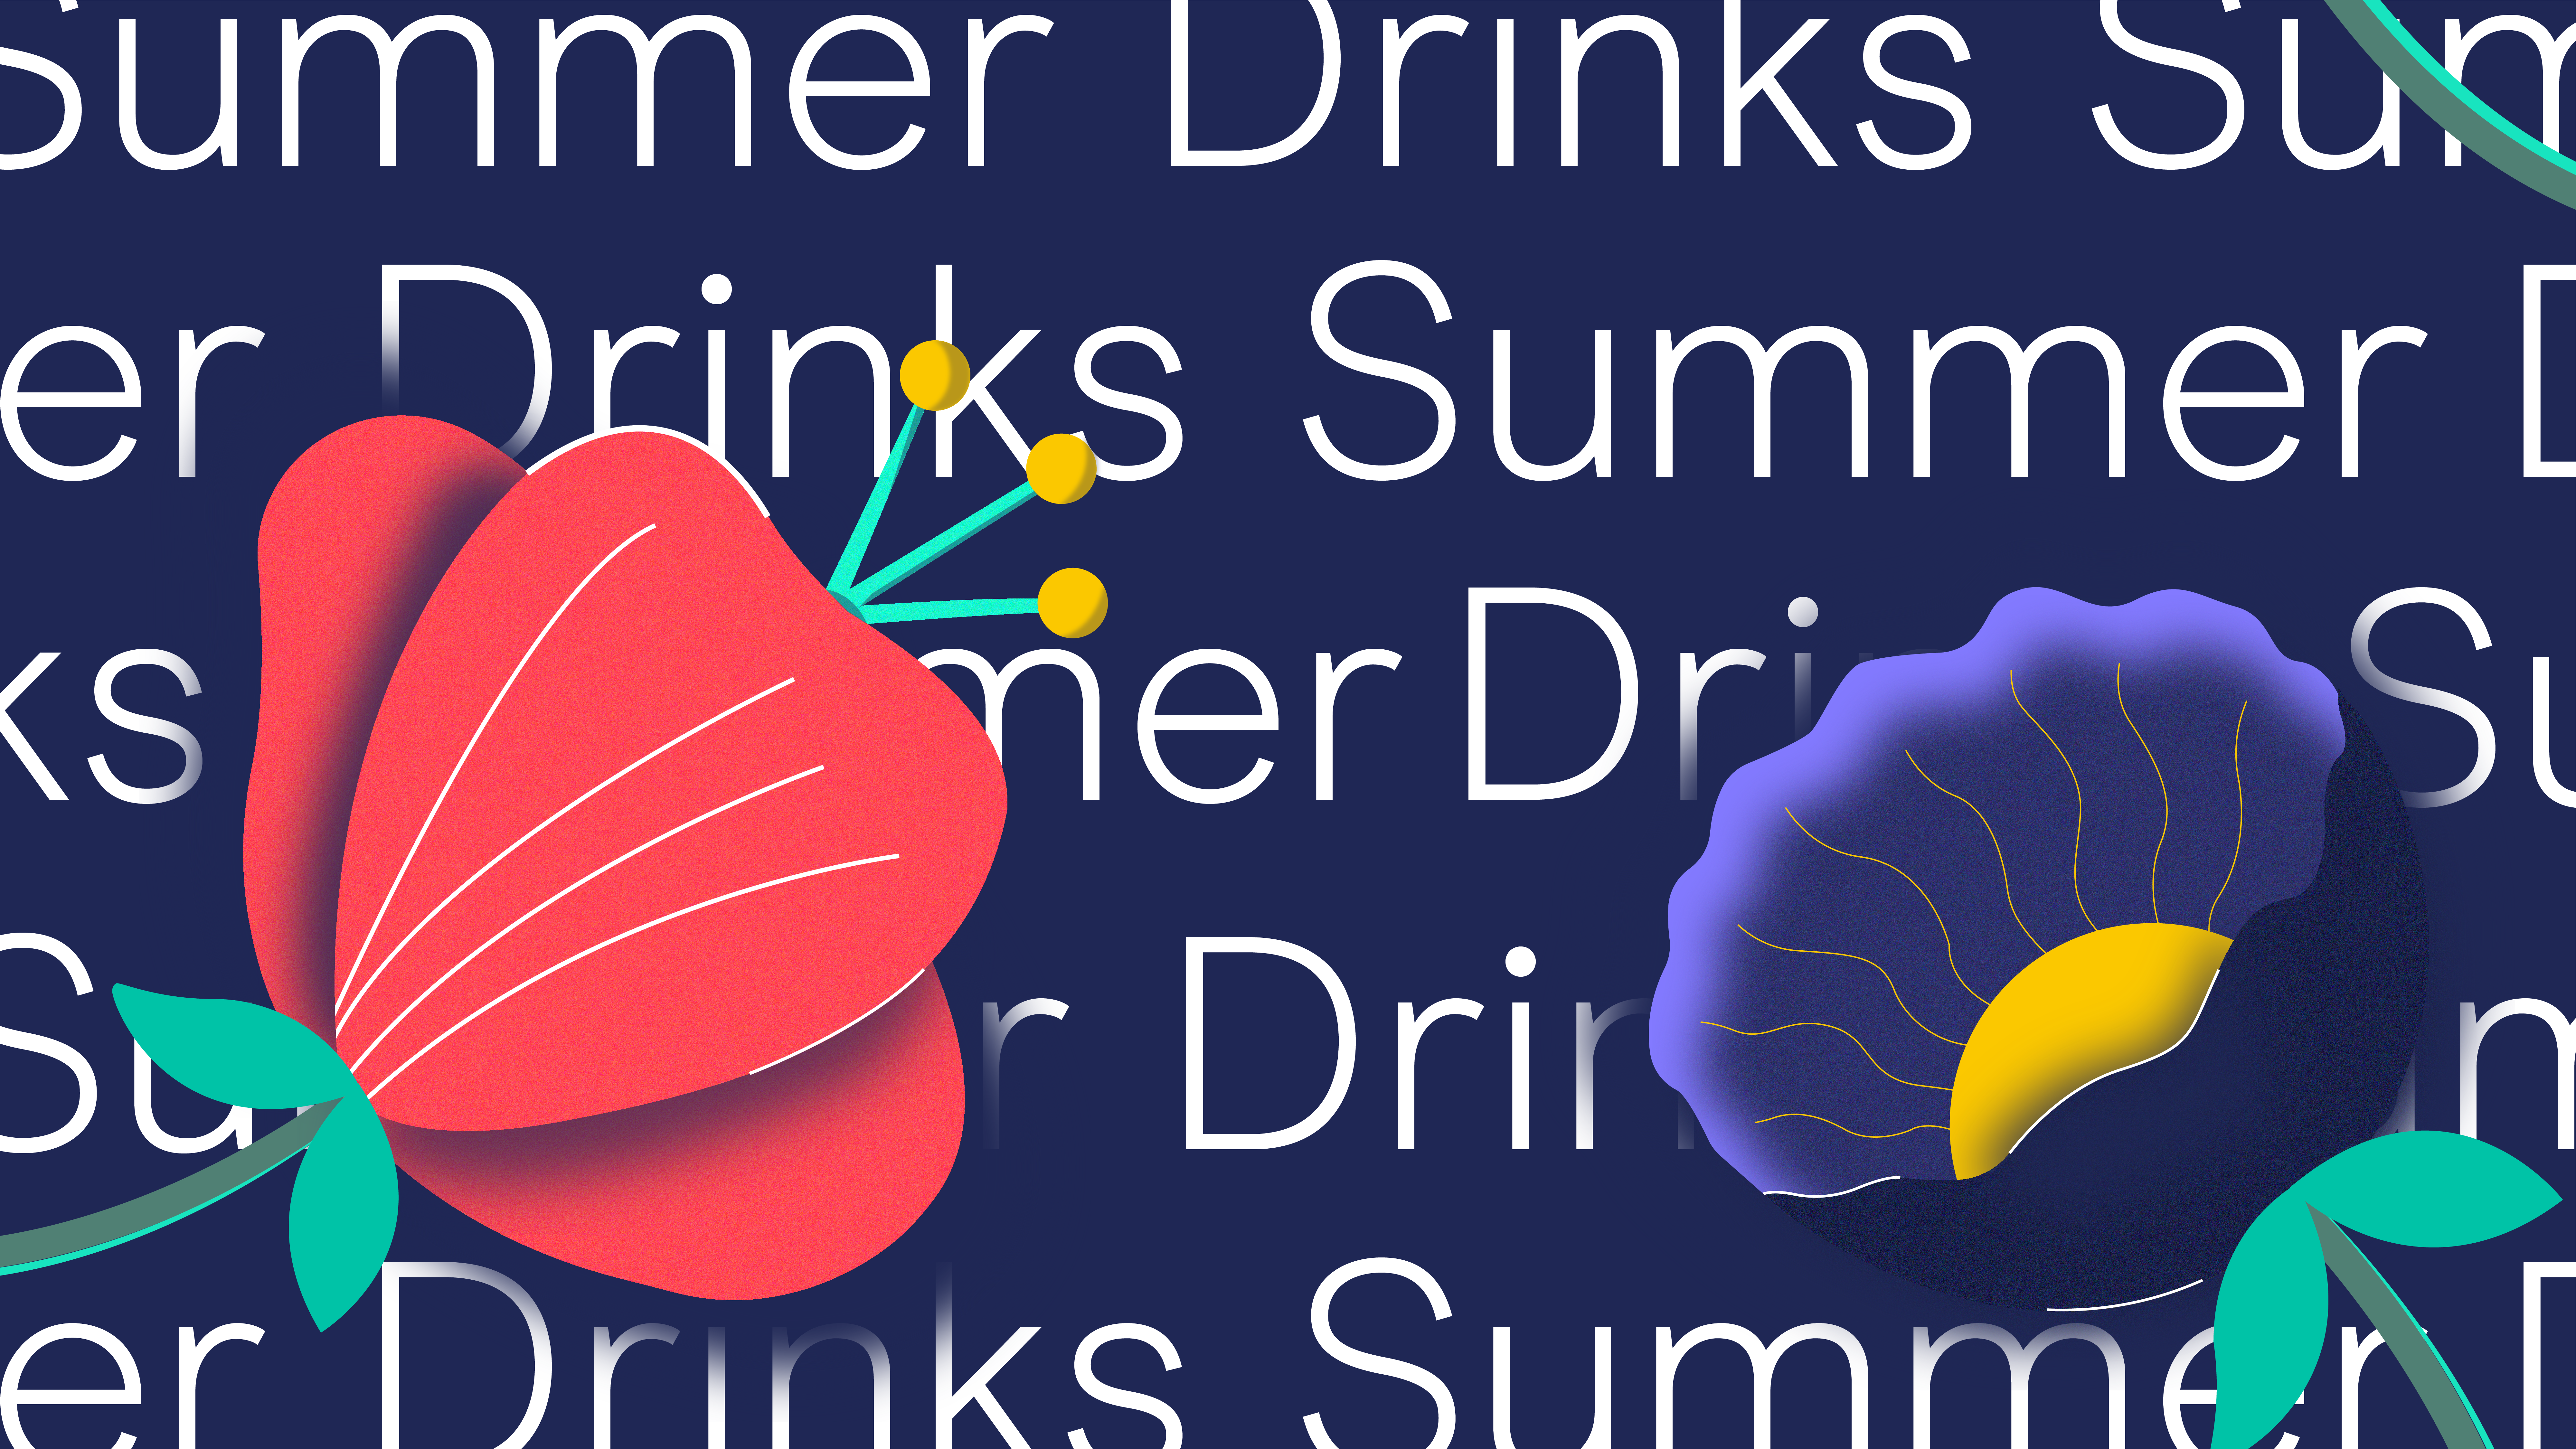 Summer Drinks - Image.png